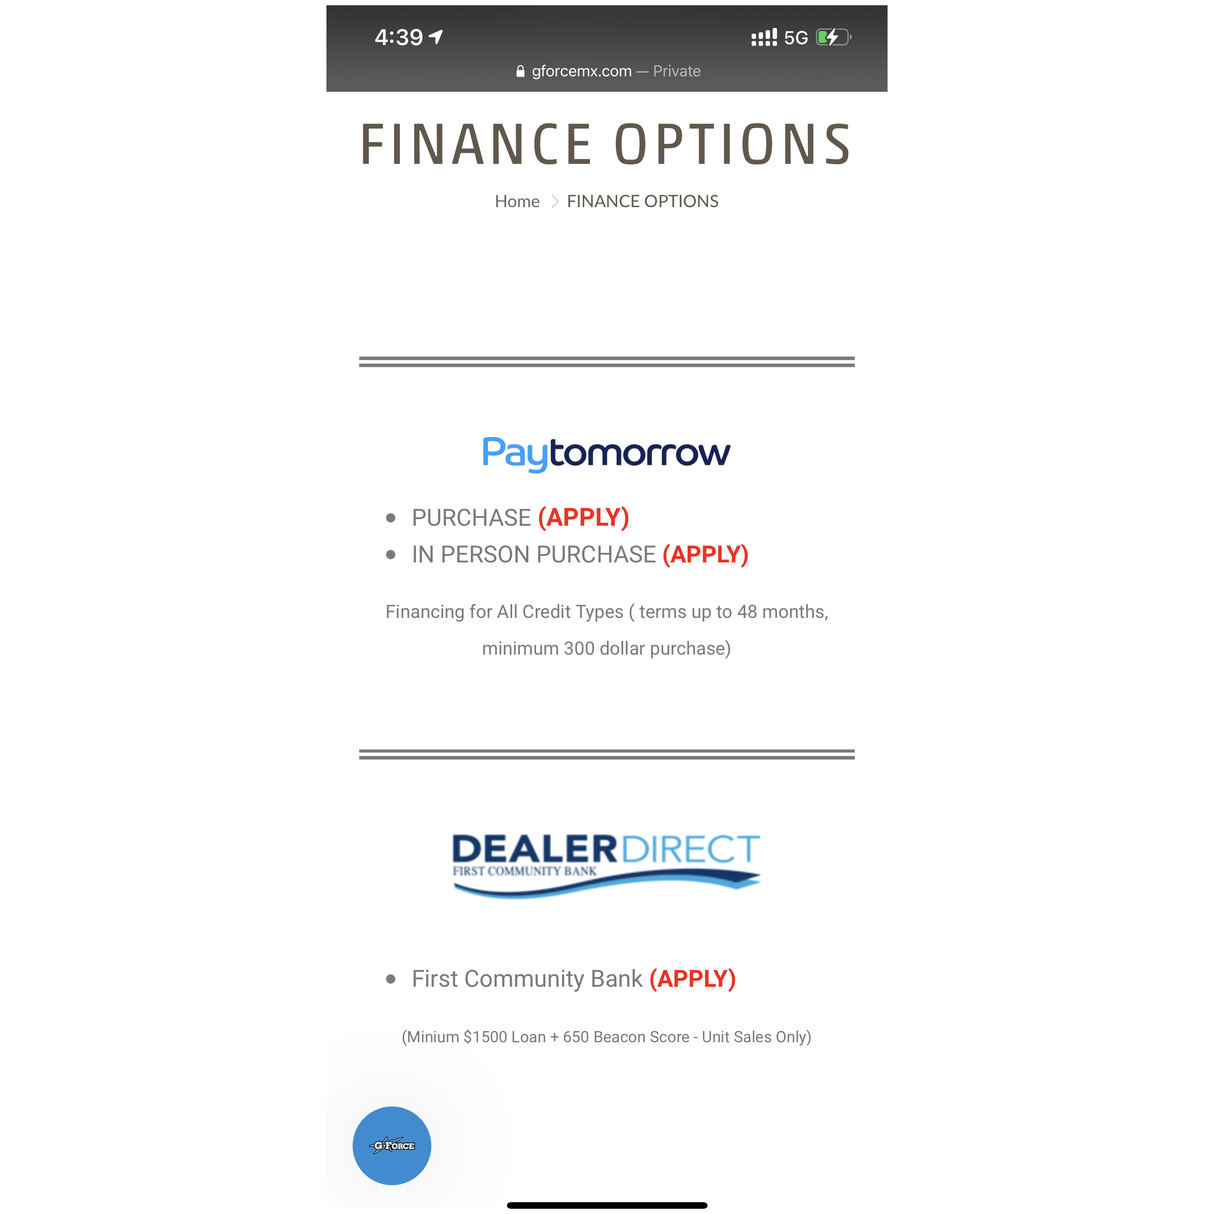 FINANCE OPTIONS - https://www.gforcemx.com/pages/finance-options